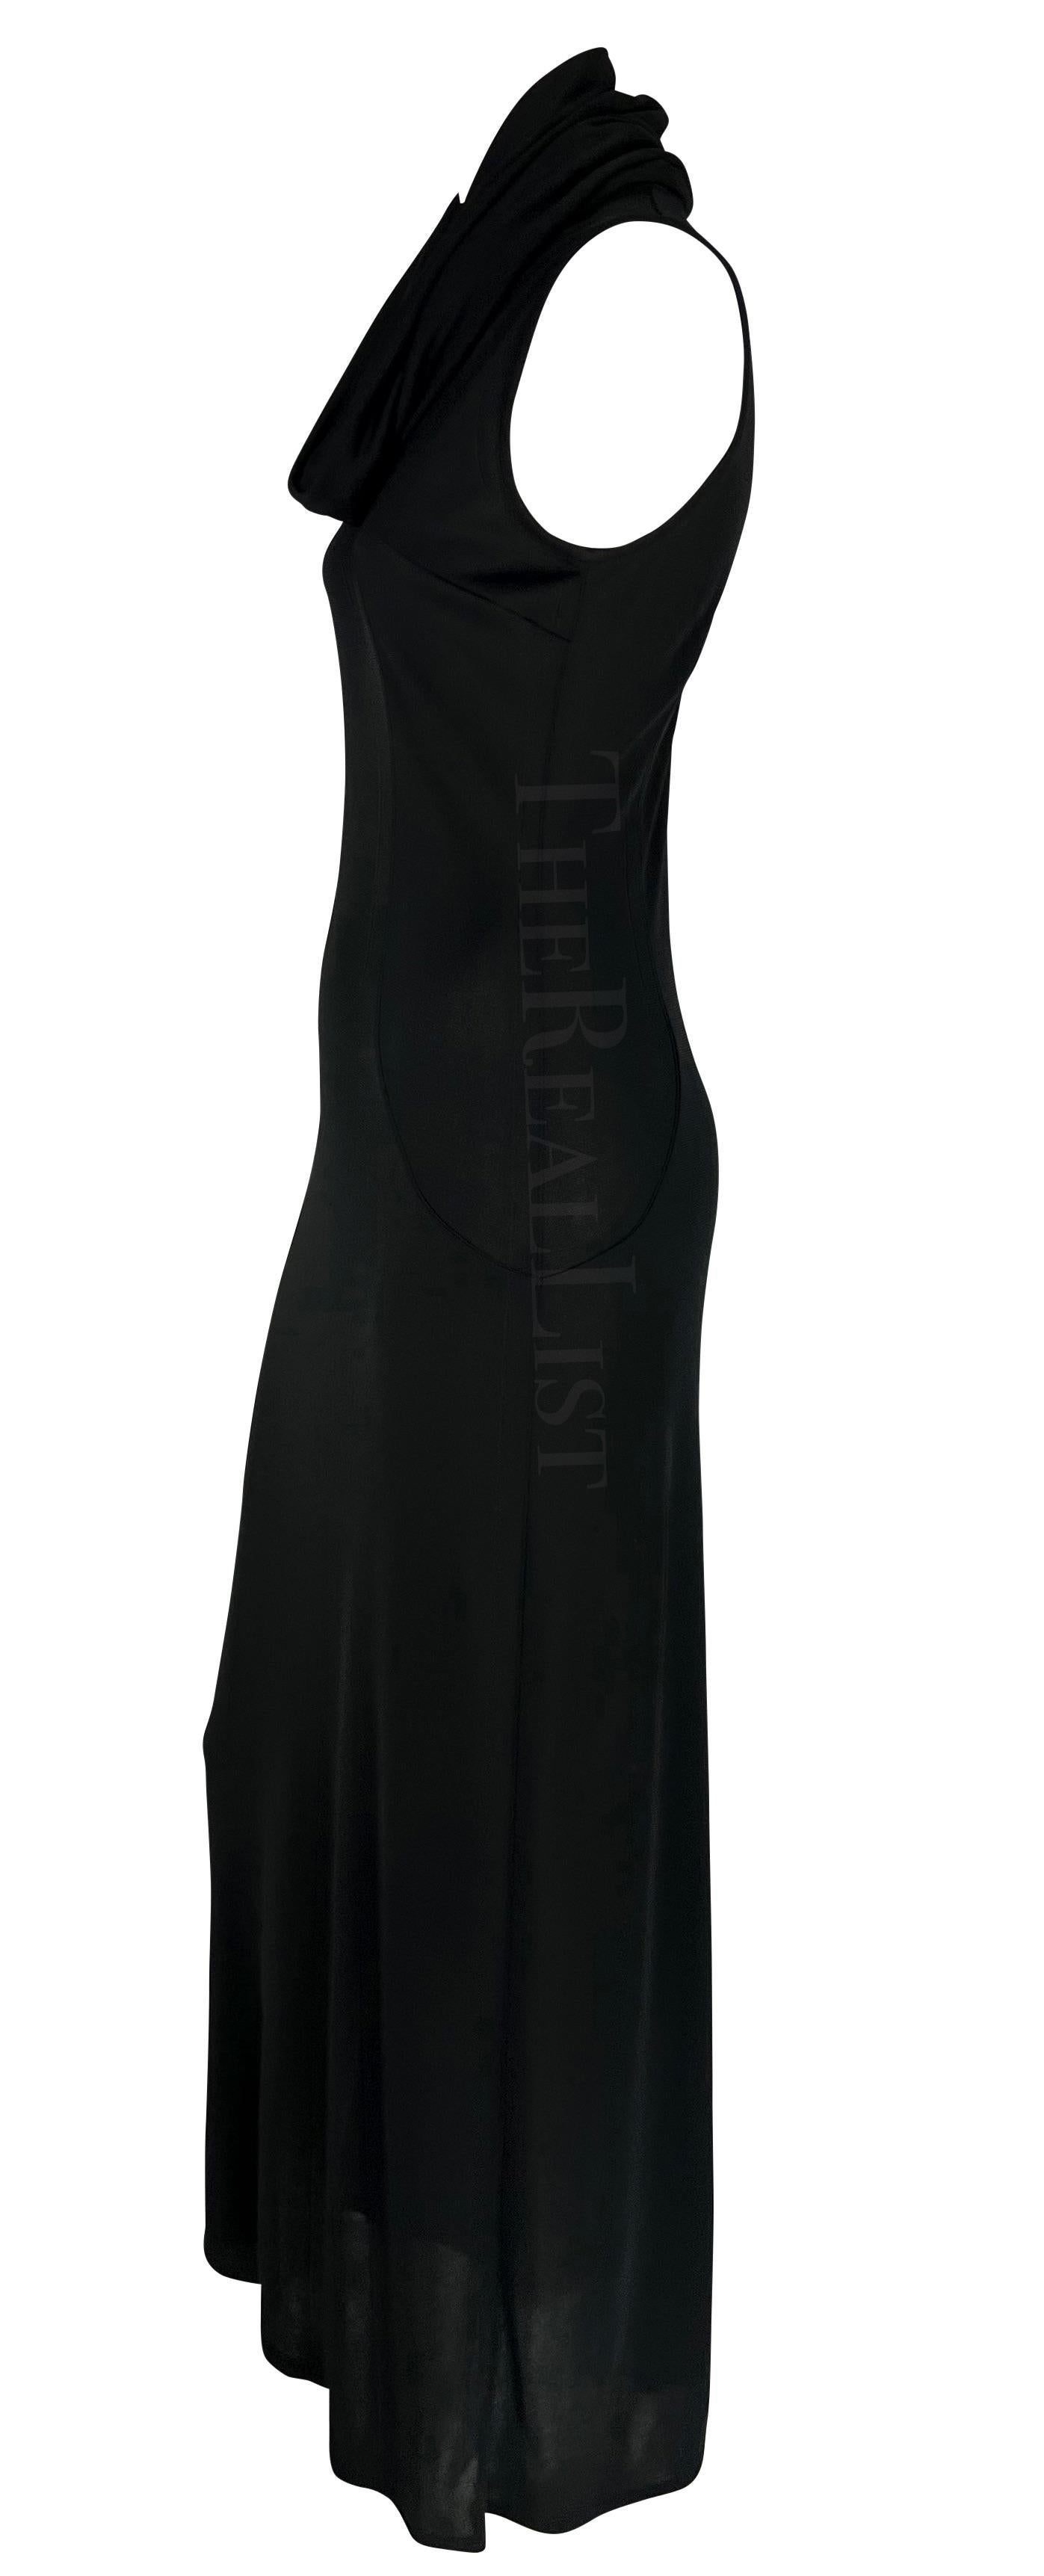 S/S 1996 Dolce & Gabbana Runway Hooded Stretch Black High Slit Dress For Sale 7